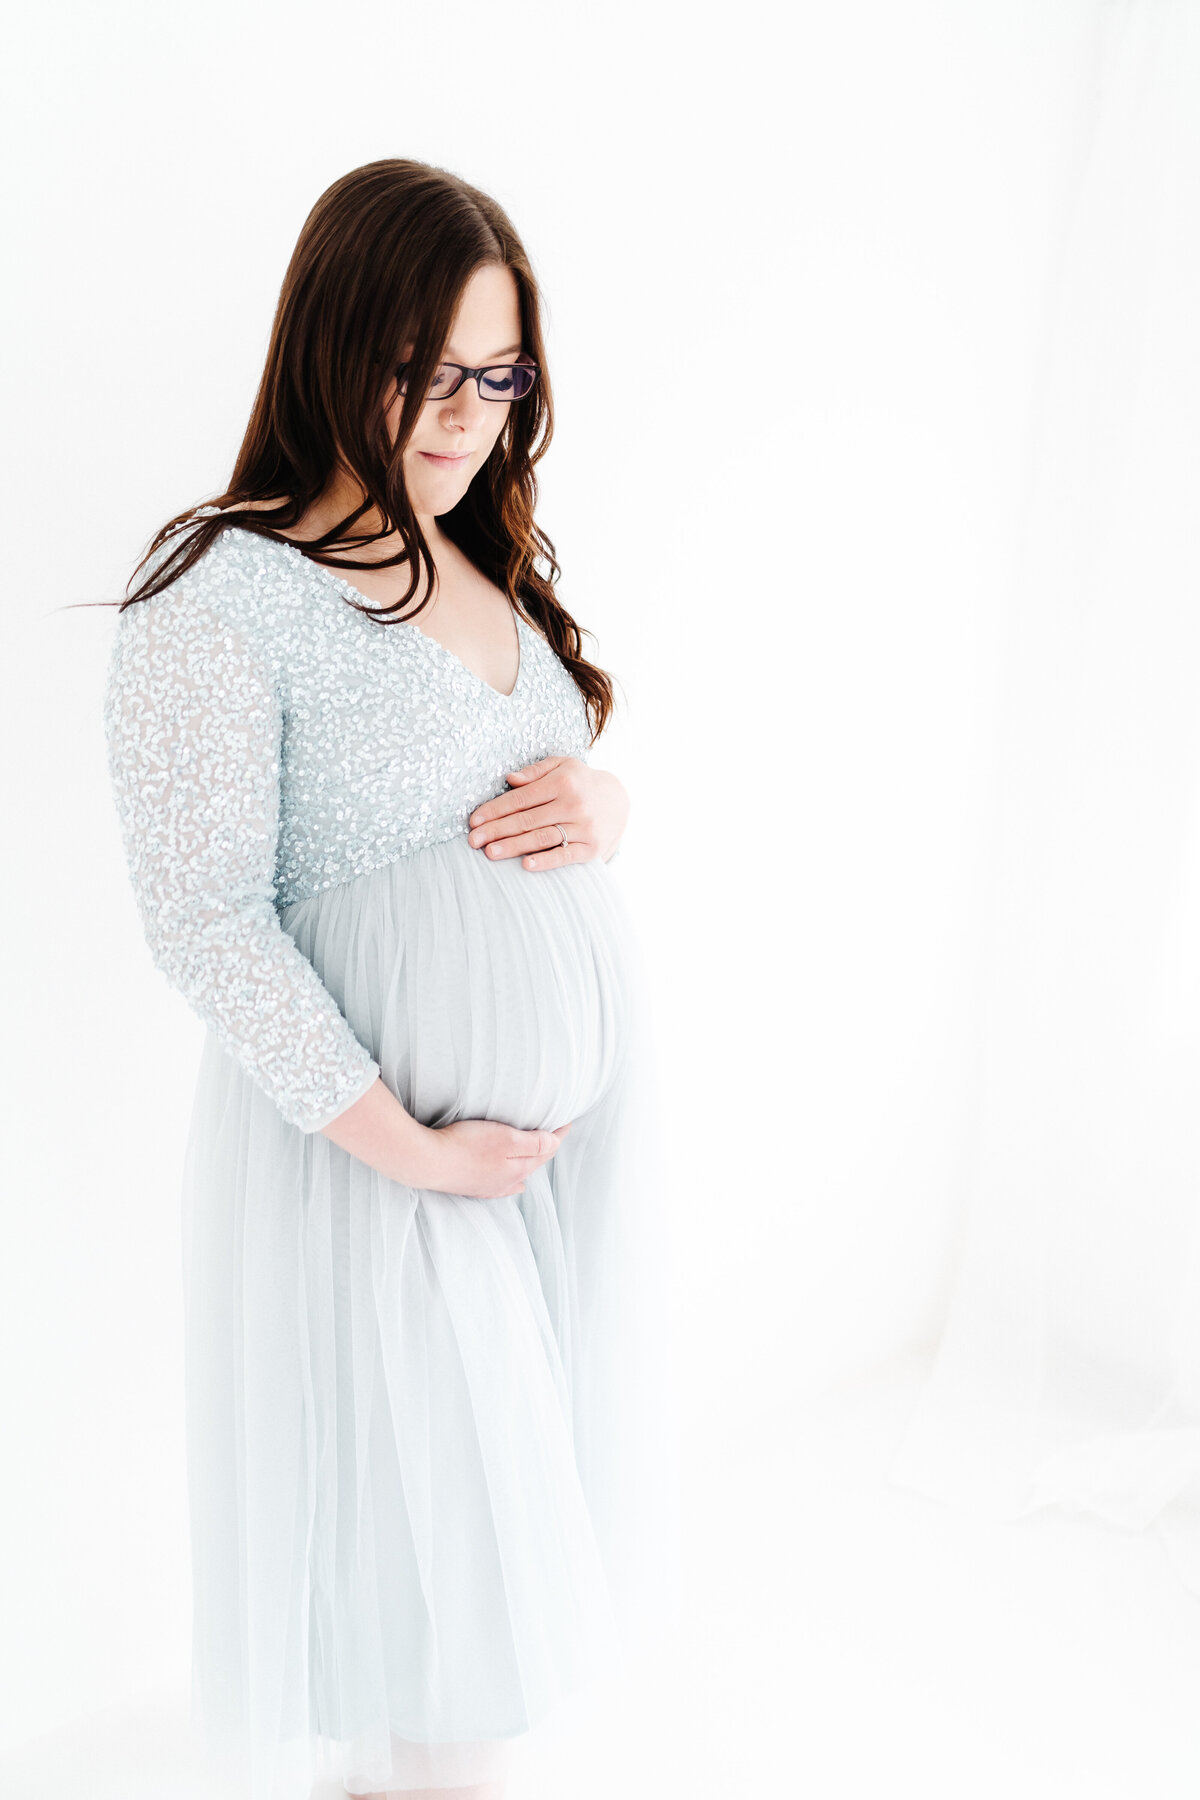 JaymeeD-Maternity-7